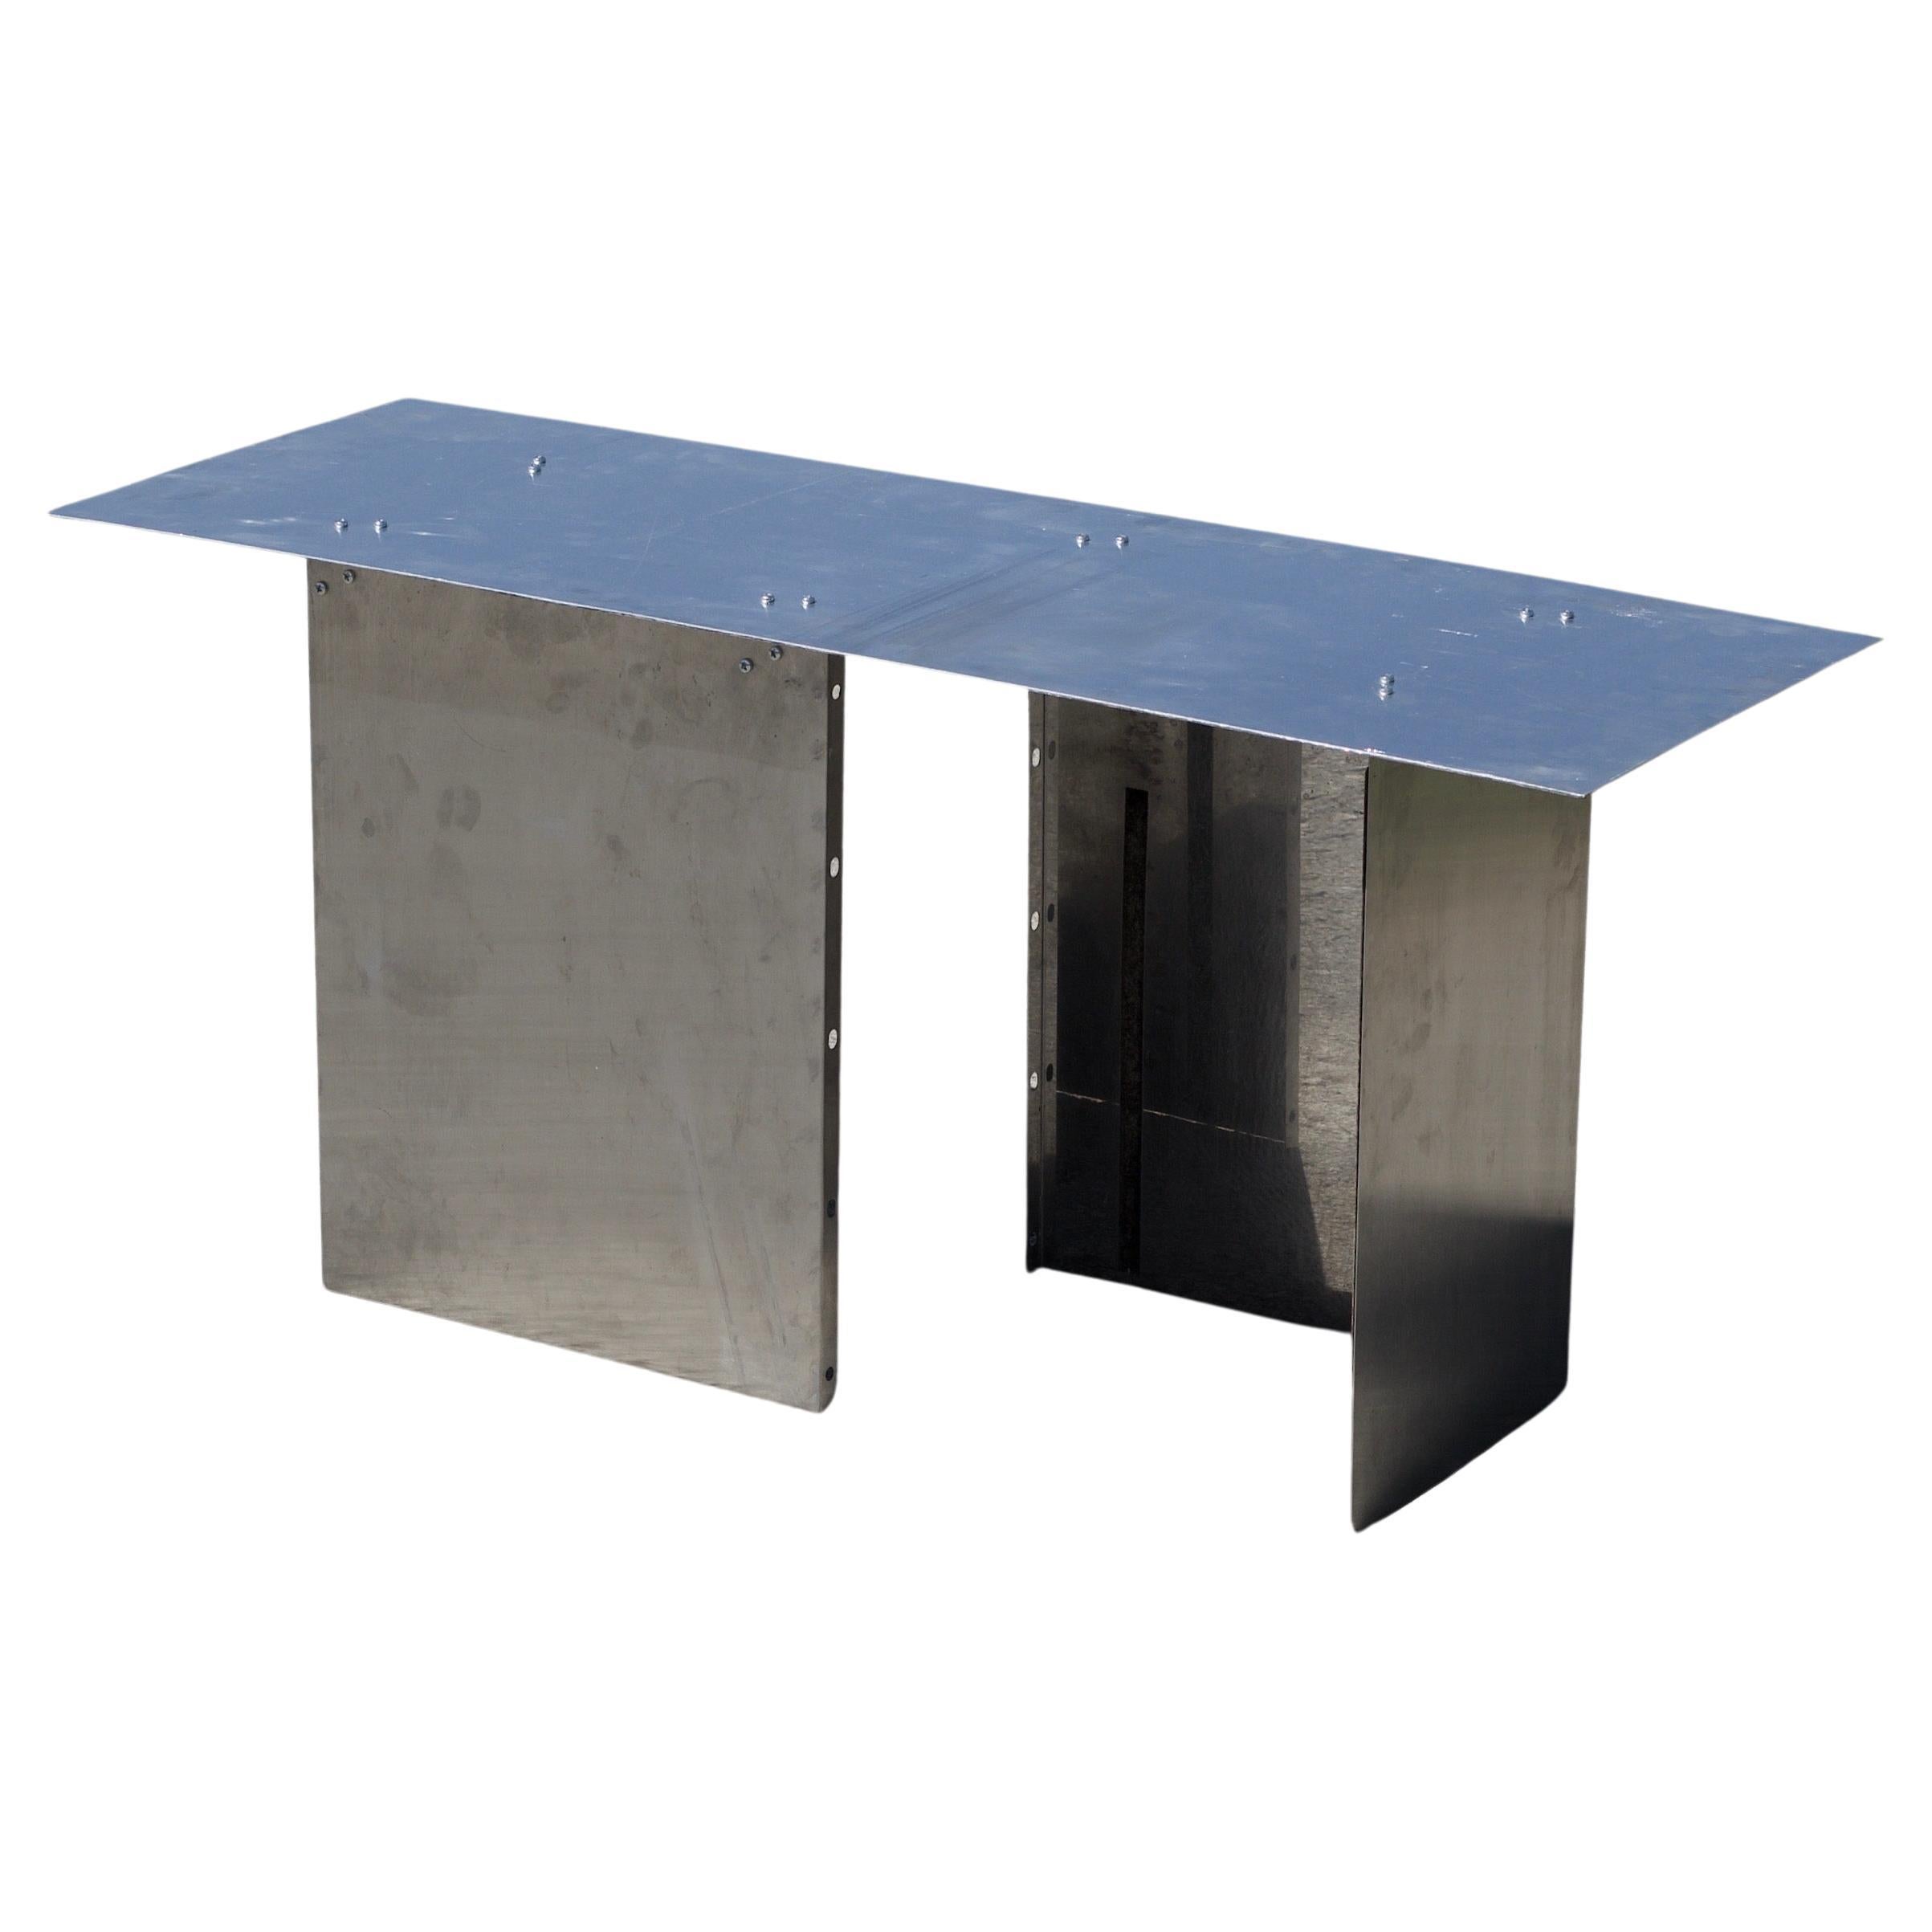 ‘S0-2h’ Lounge Table by Maximilian Hofmann